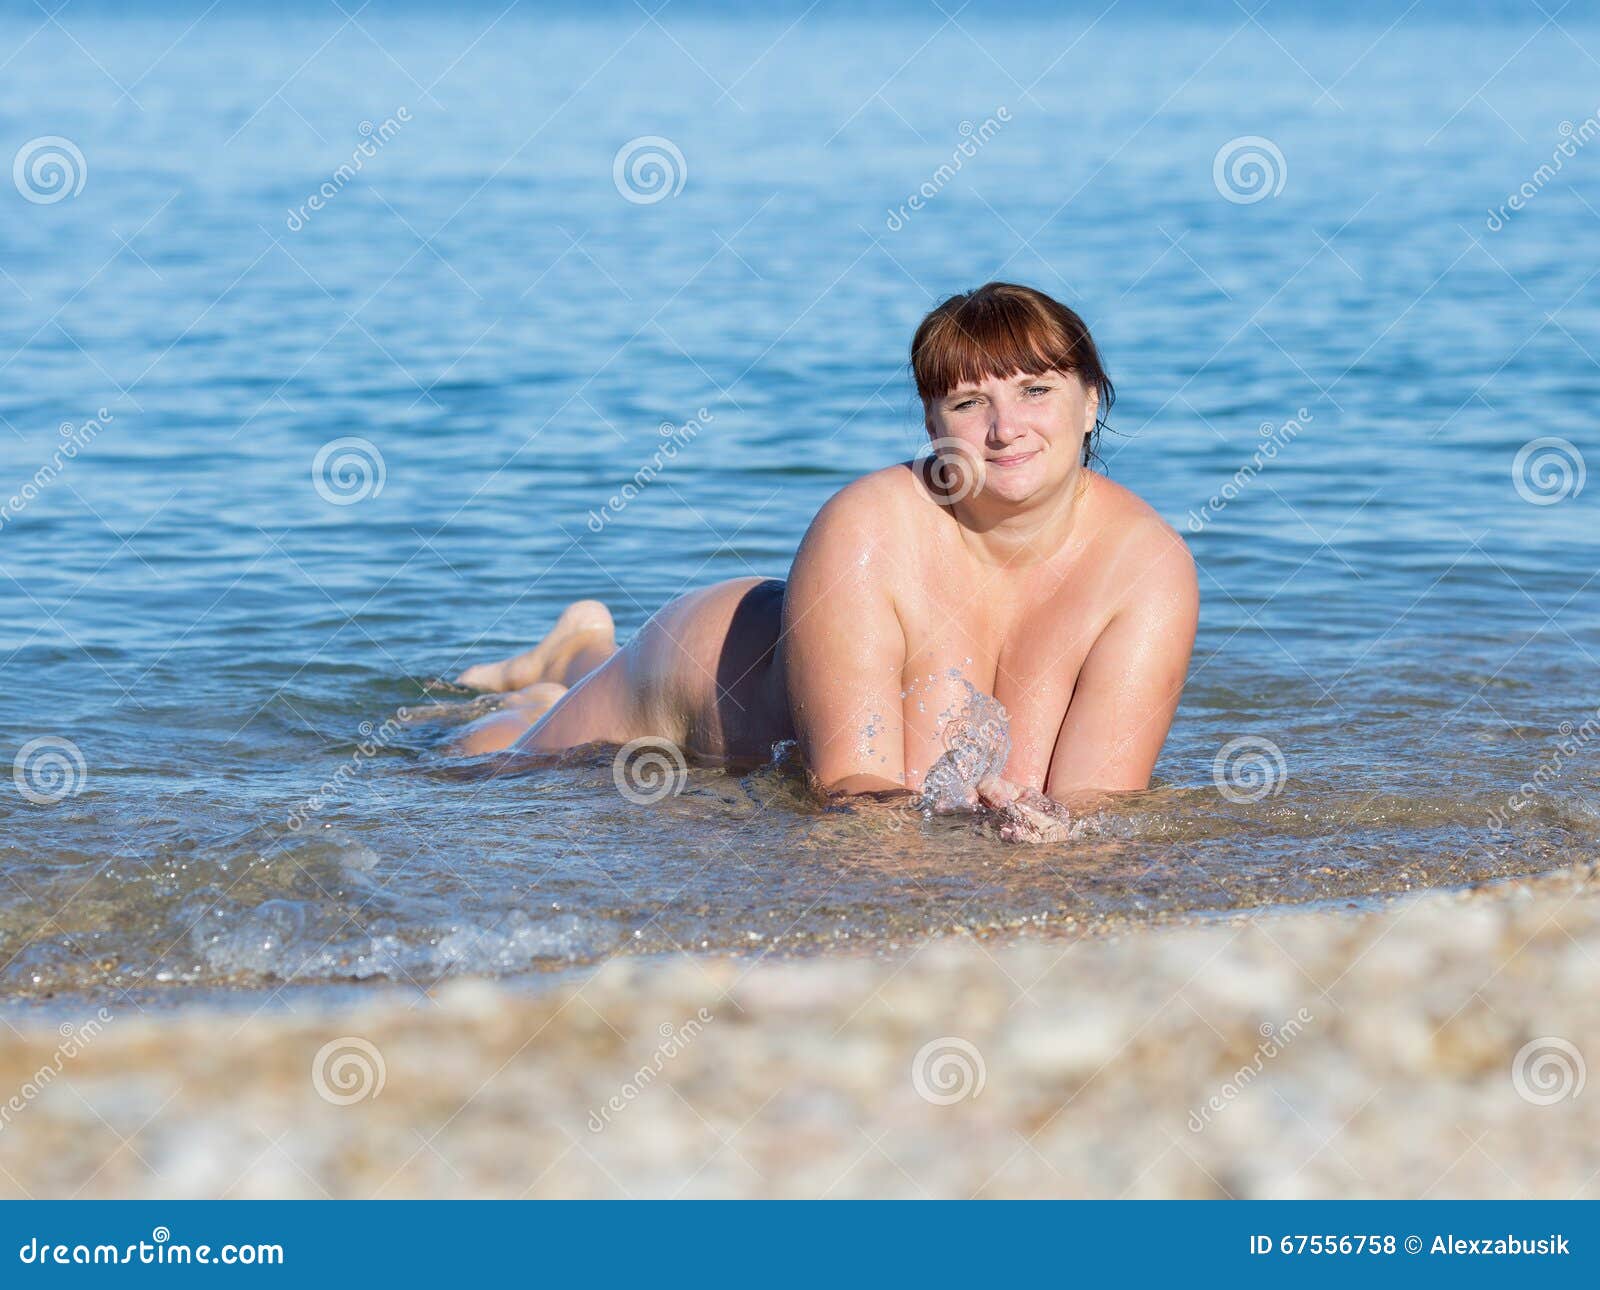 Nudist Women Skinny Dip